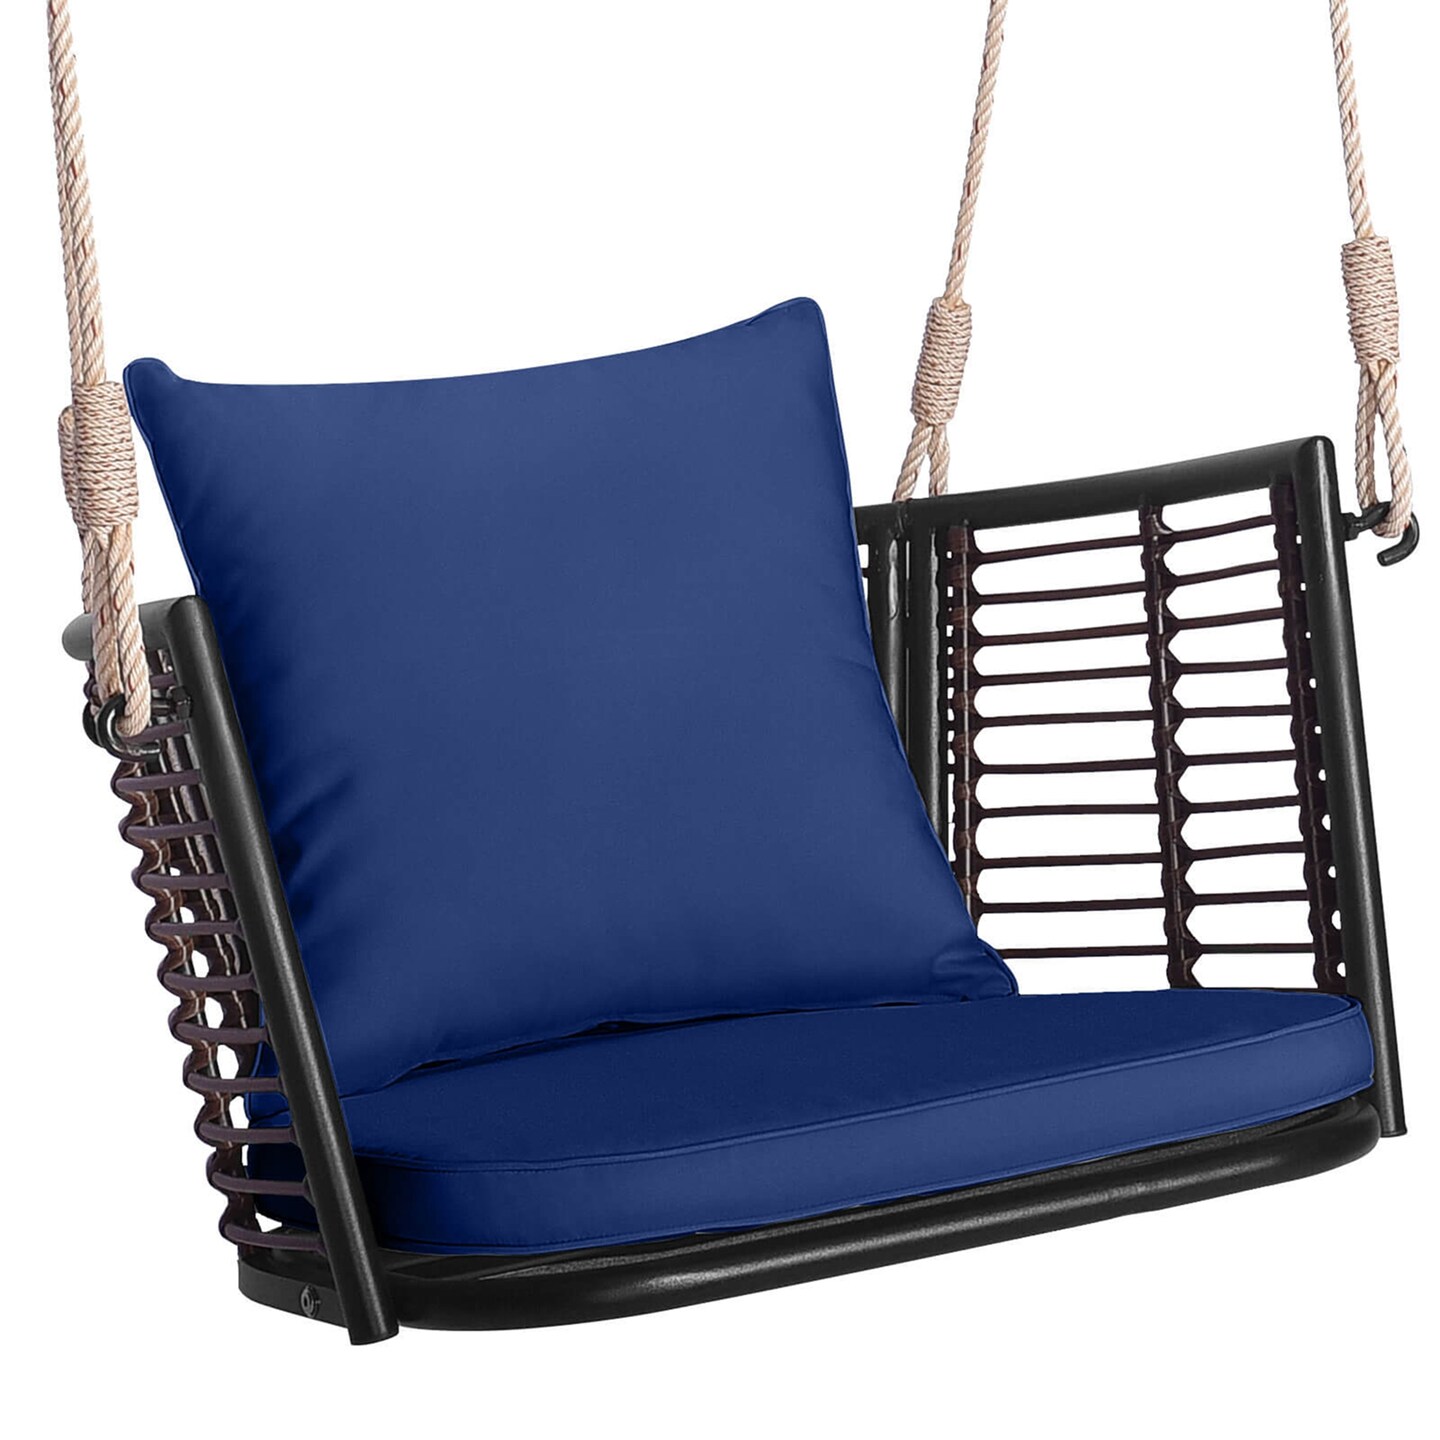 Costway Patio Hanging Rattan Basket Chair Swing Hammock Chair with Seat Cushion Navy/Grey/Beige